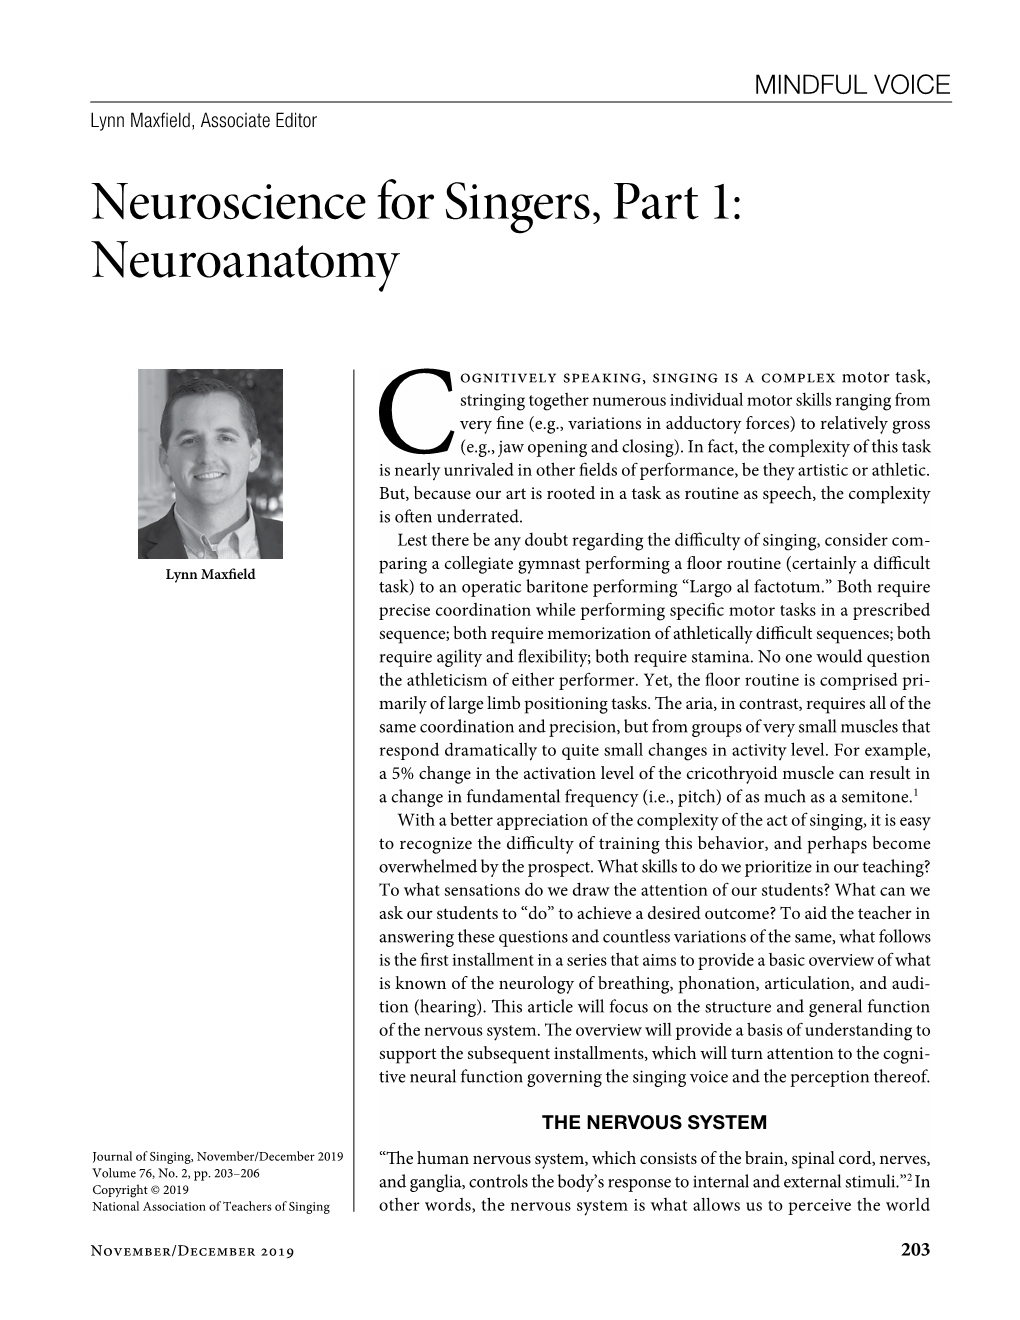 JOS-076-2-2019-203-Neuroscience for Singers